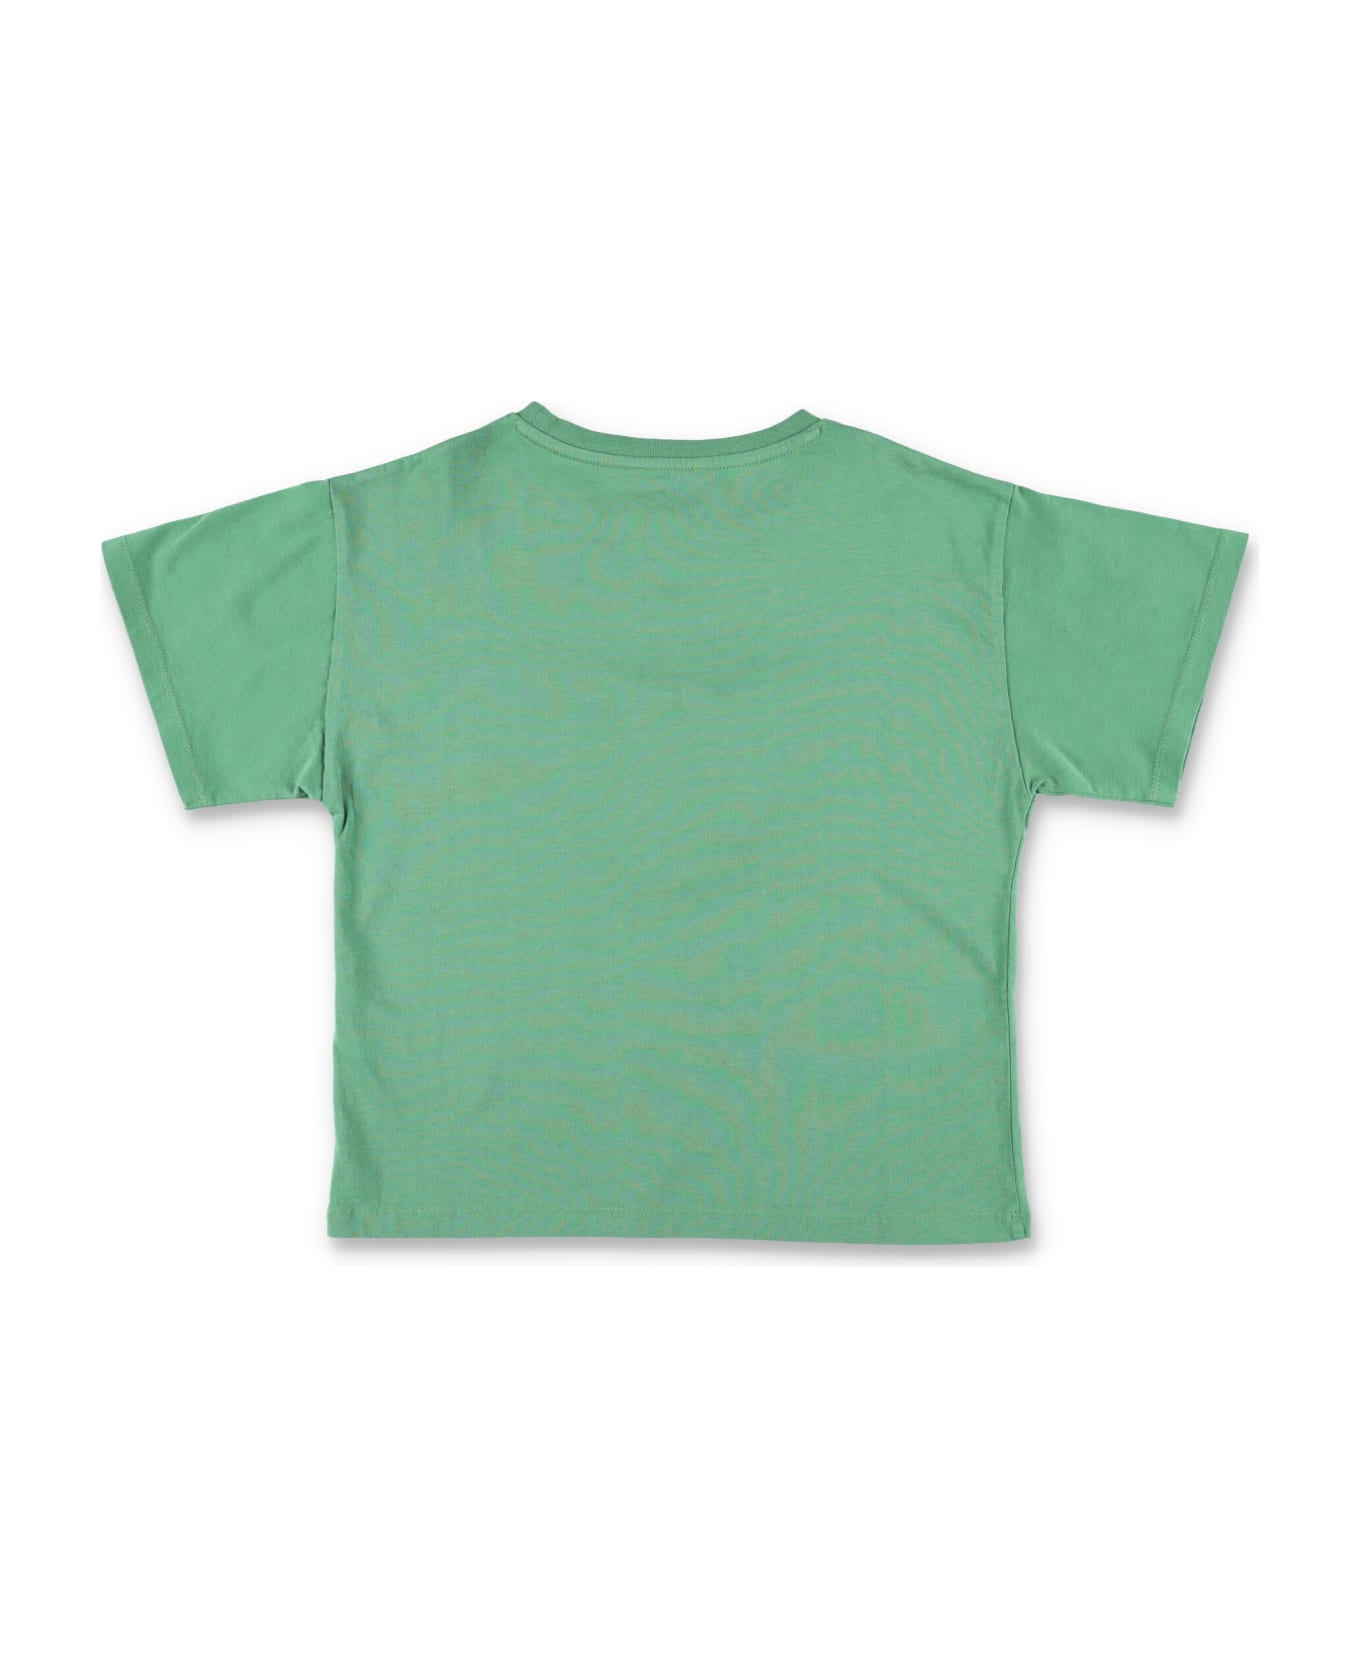 Kenzo Kids Logo T-shirt - MINT GREEN